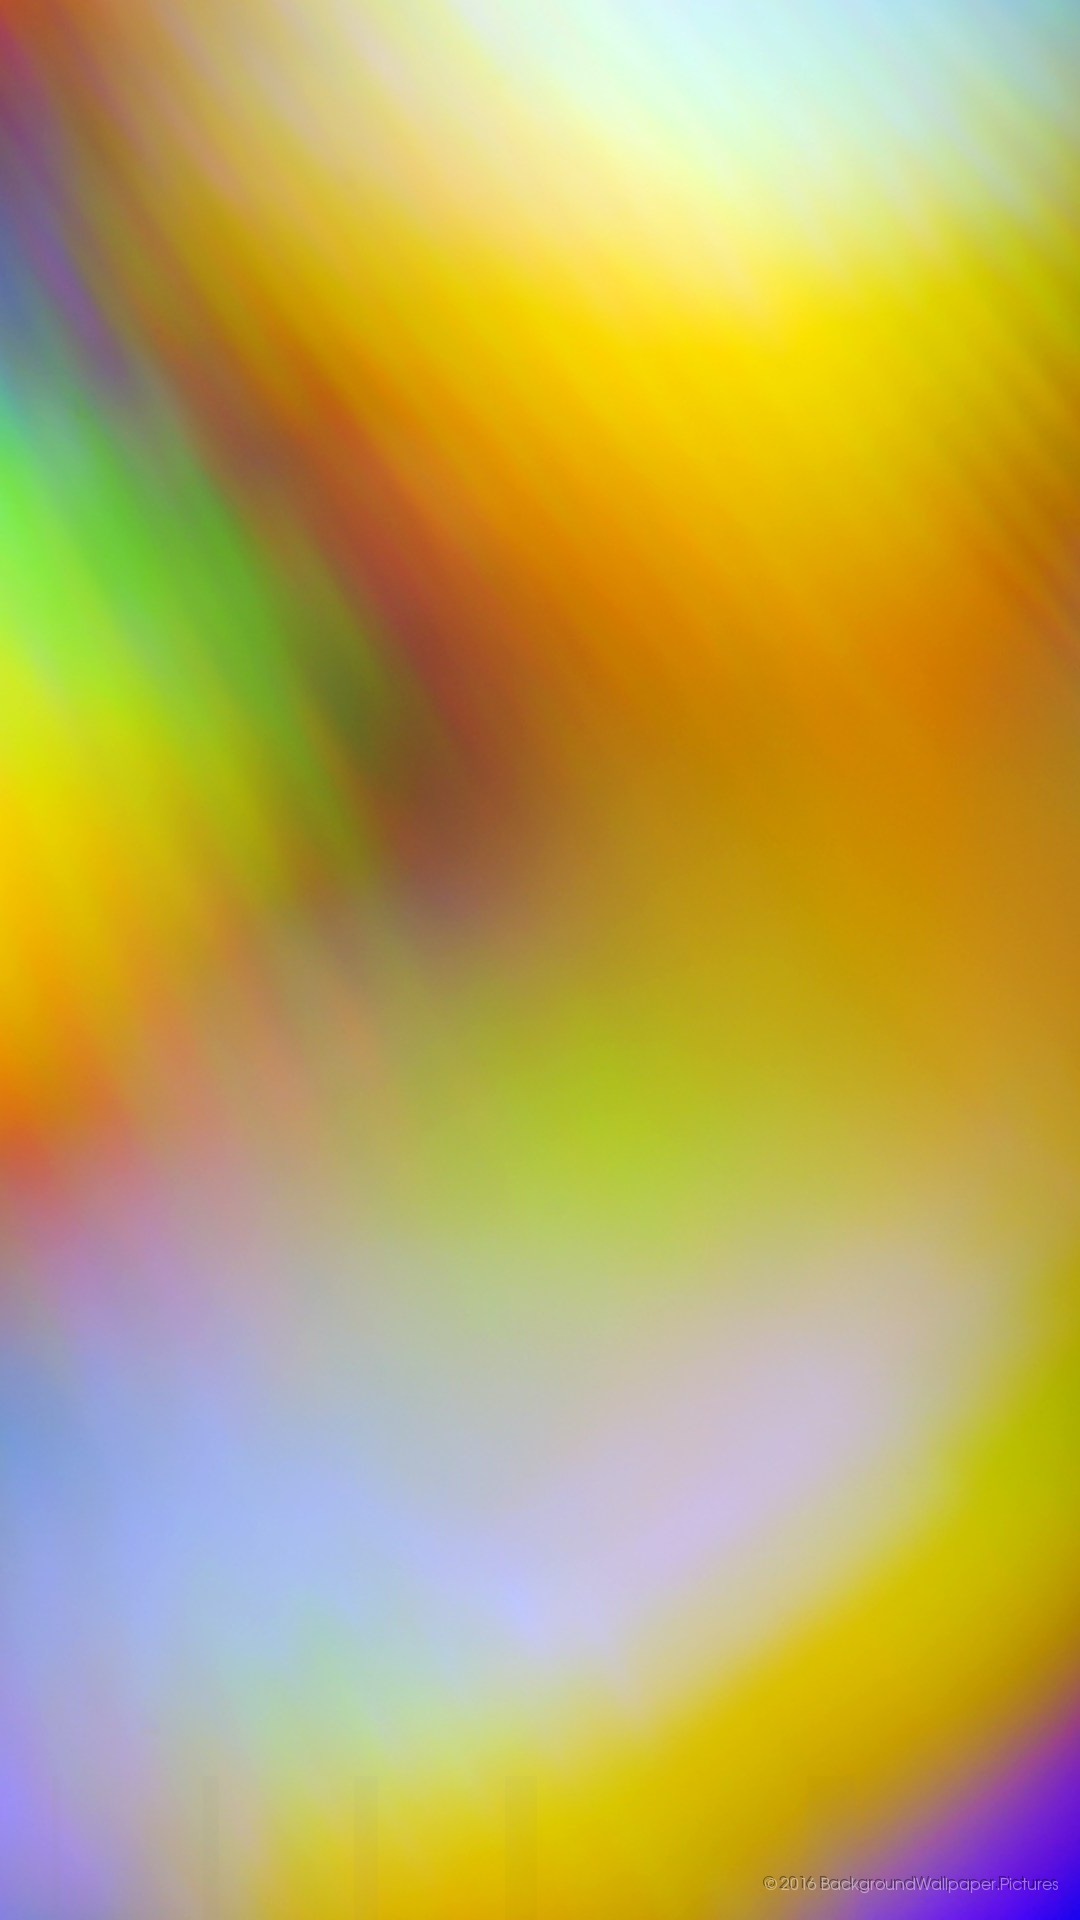 micromax fondos de pantalla hd,amarillo,naranja,verde,cielo,ligero